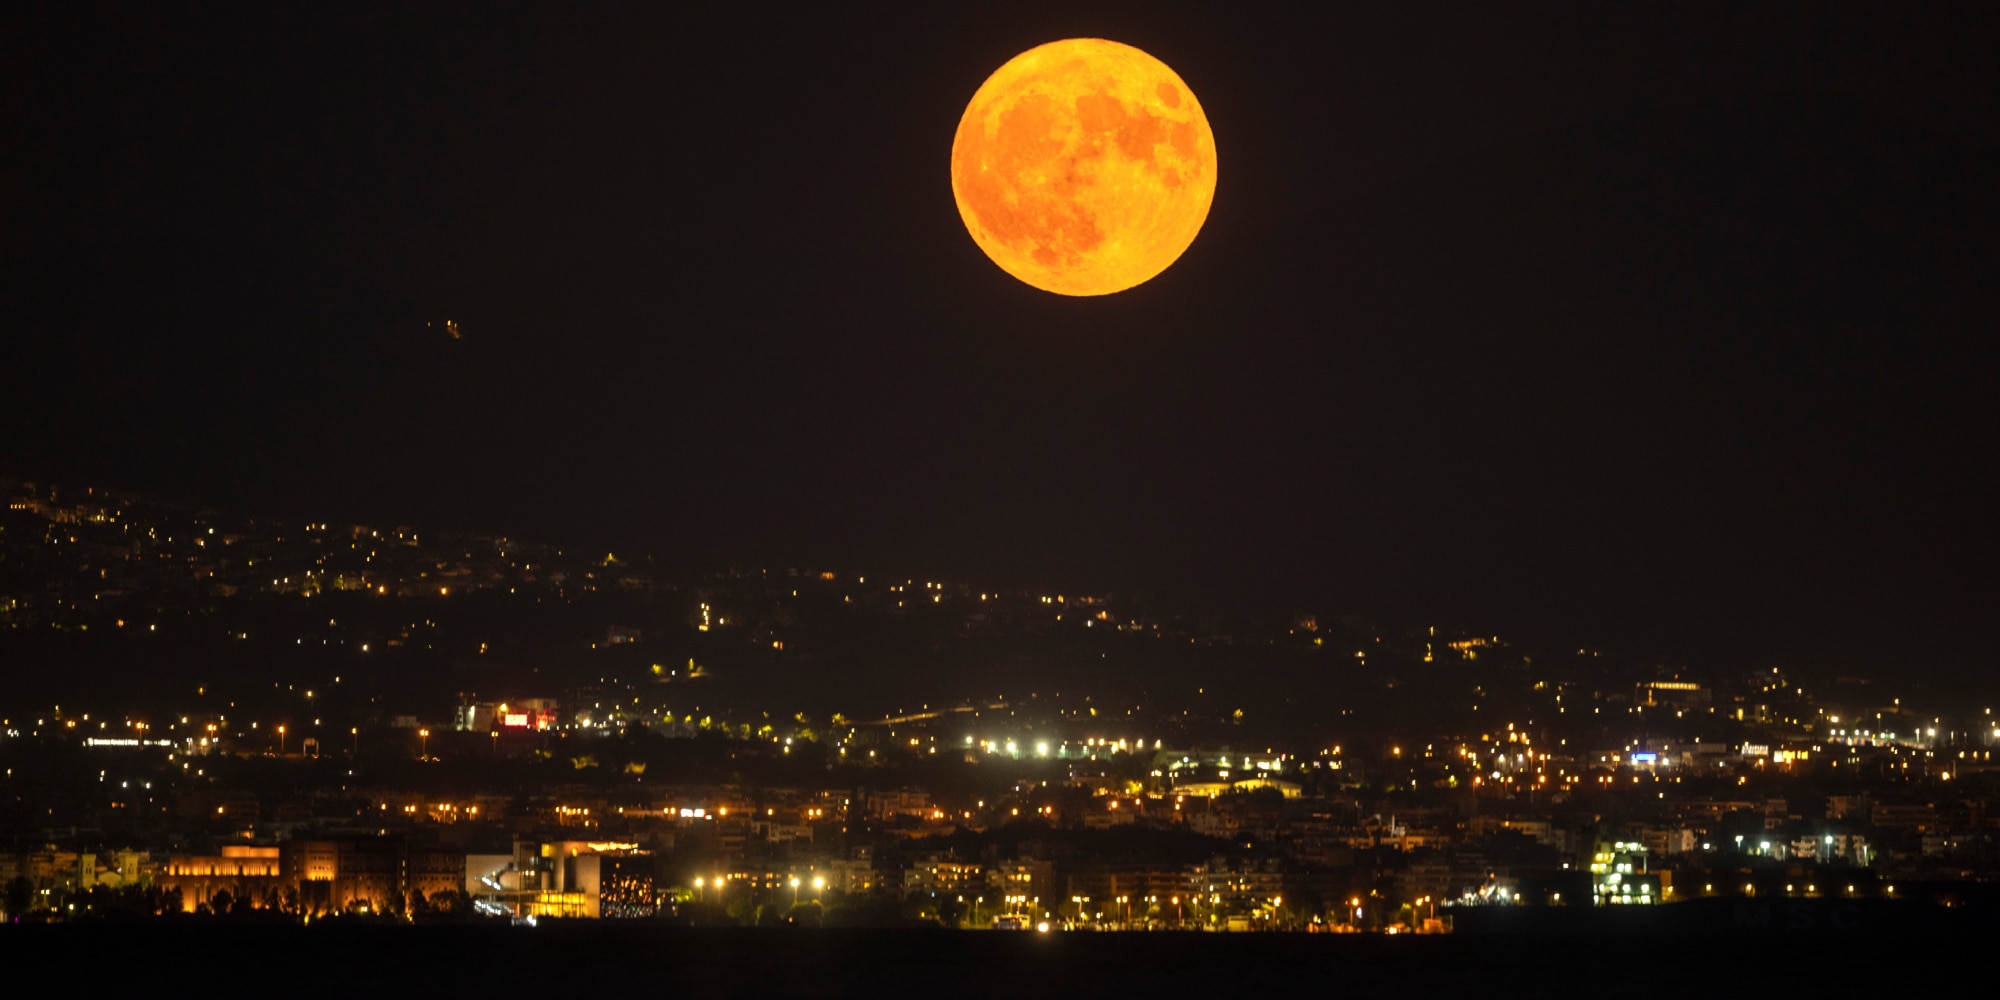 perama yperpanselinos - Πέντε συγκλονιστικά κλικ από την υπερπανσέληνο του Αυγούστου: Από την Ακρόπολη μέχρι το Σούνιο, μάγεψε το «φεγγάρι του οξύρρυγχου»